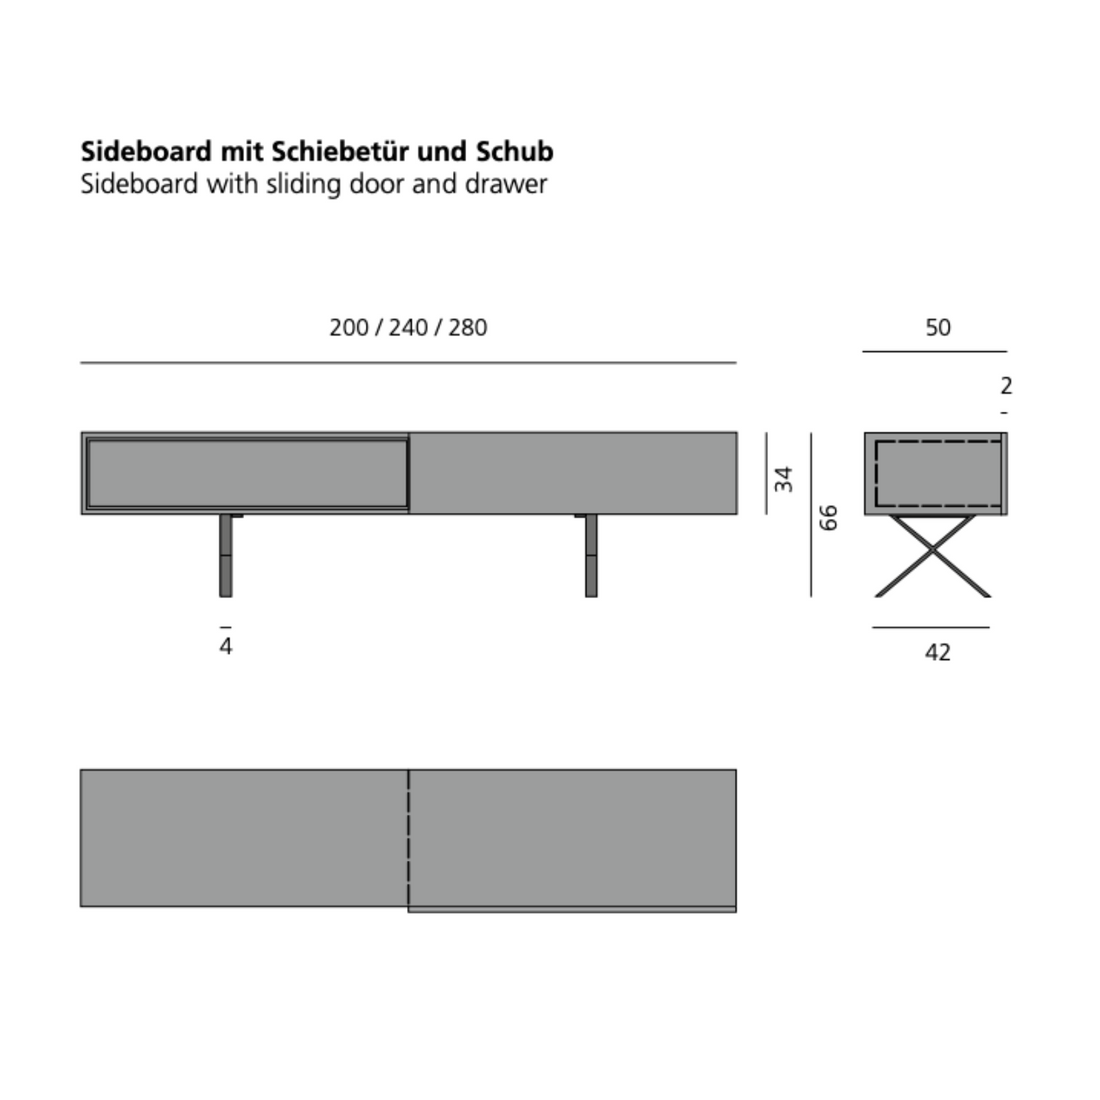 MORE MOEBEL LAX Sideboard dimensions